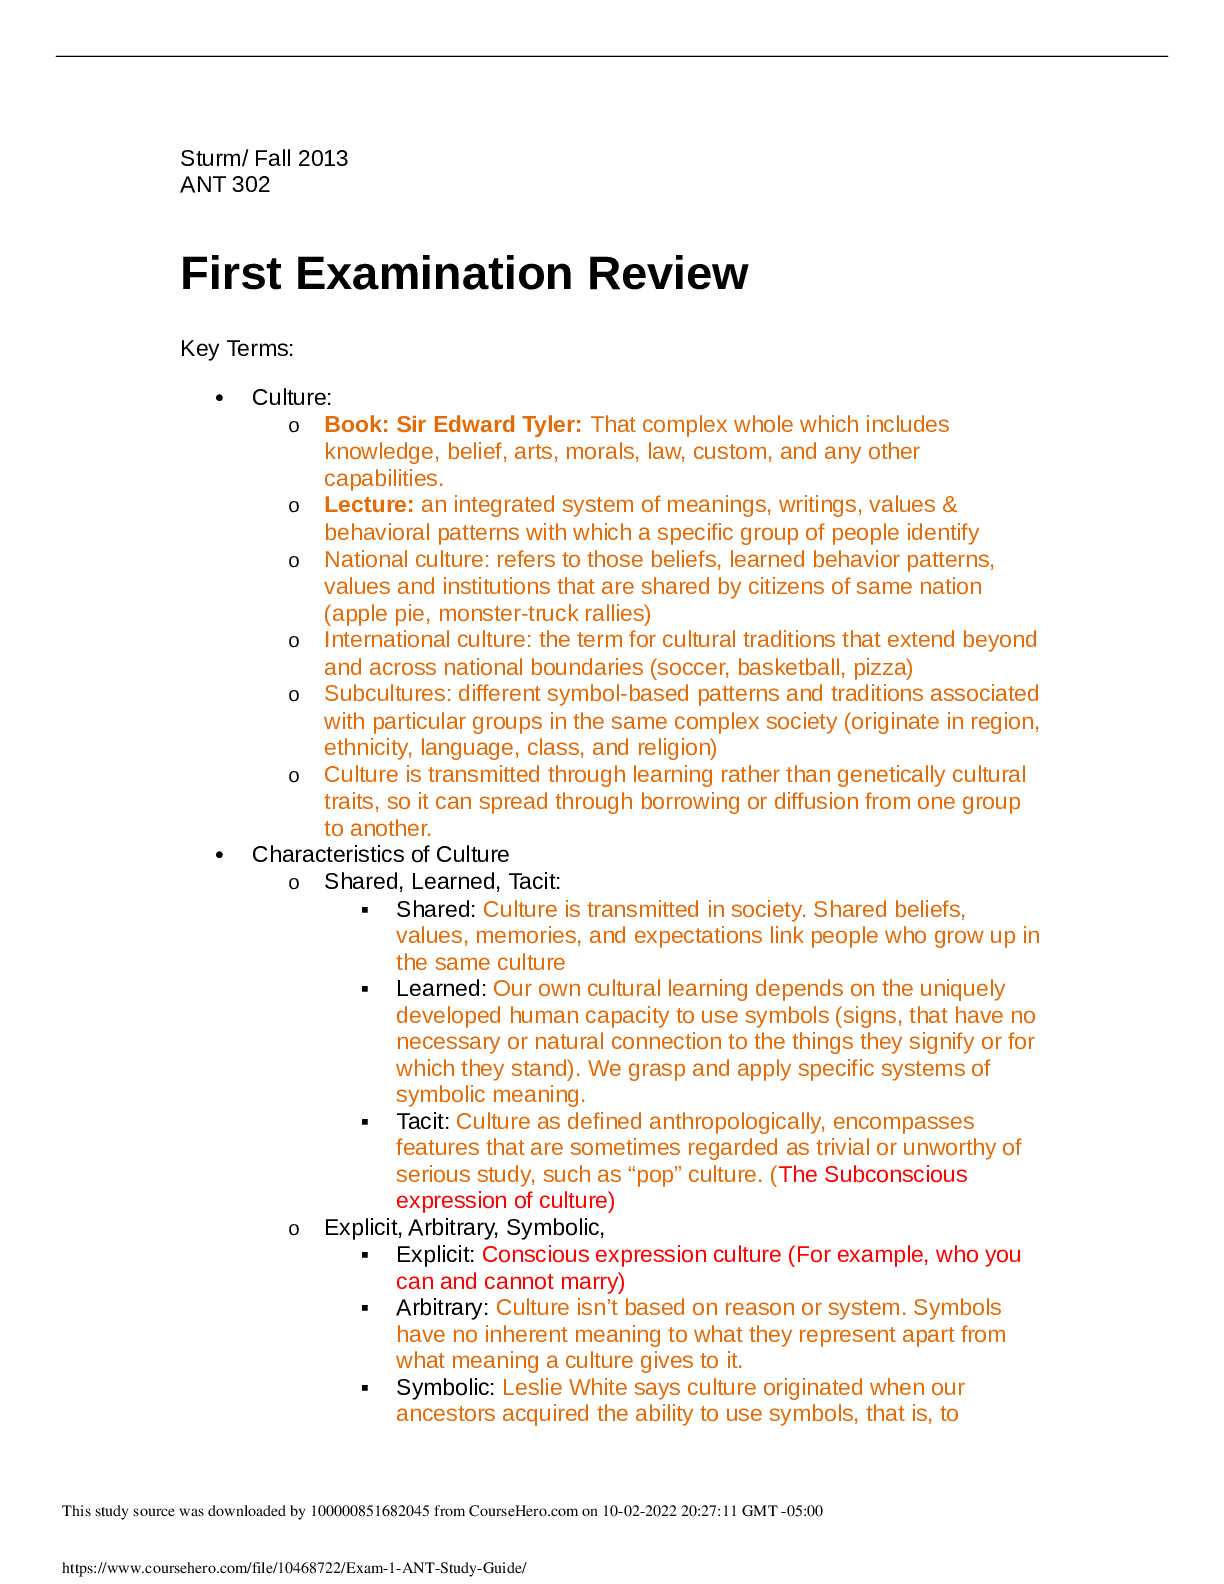 Exam_1_ANT_Study_Guide